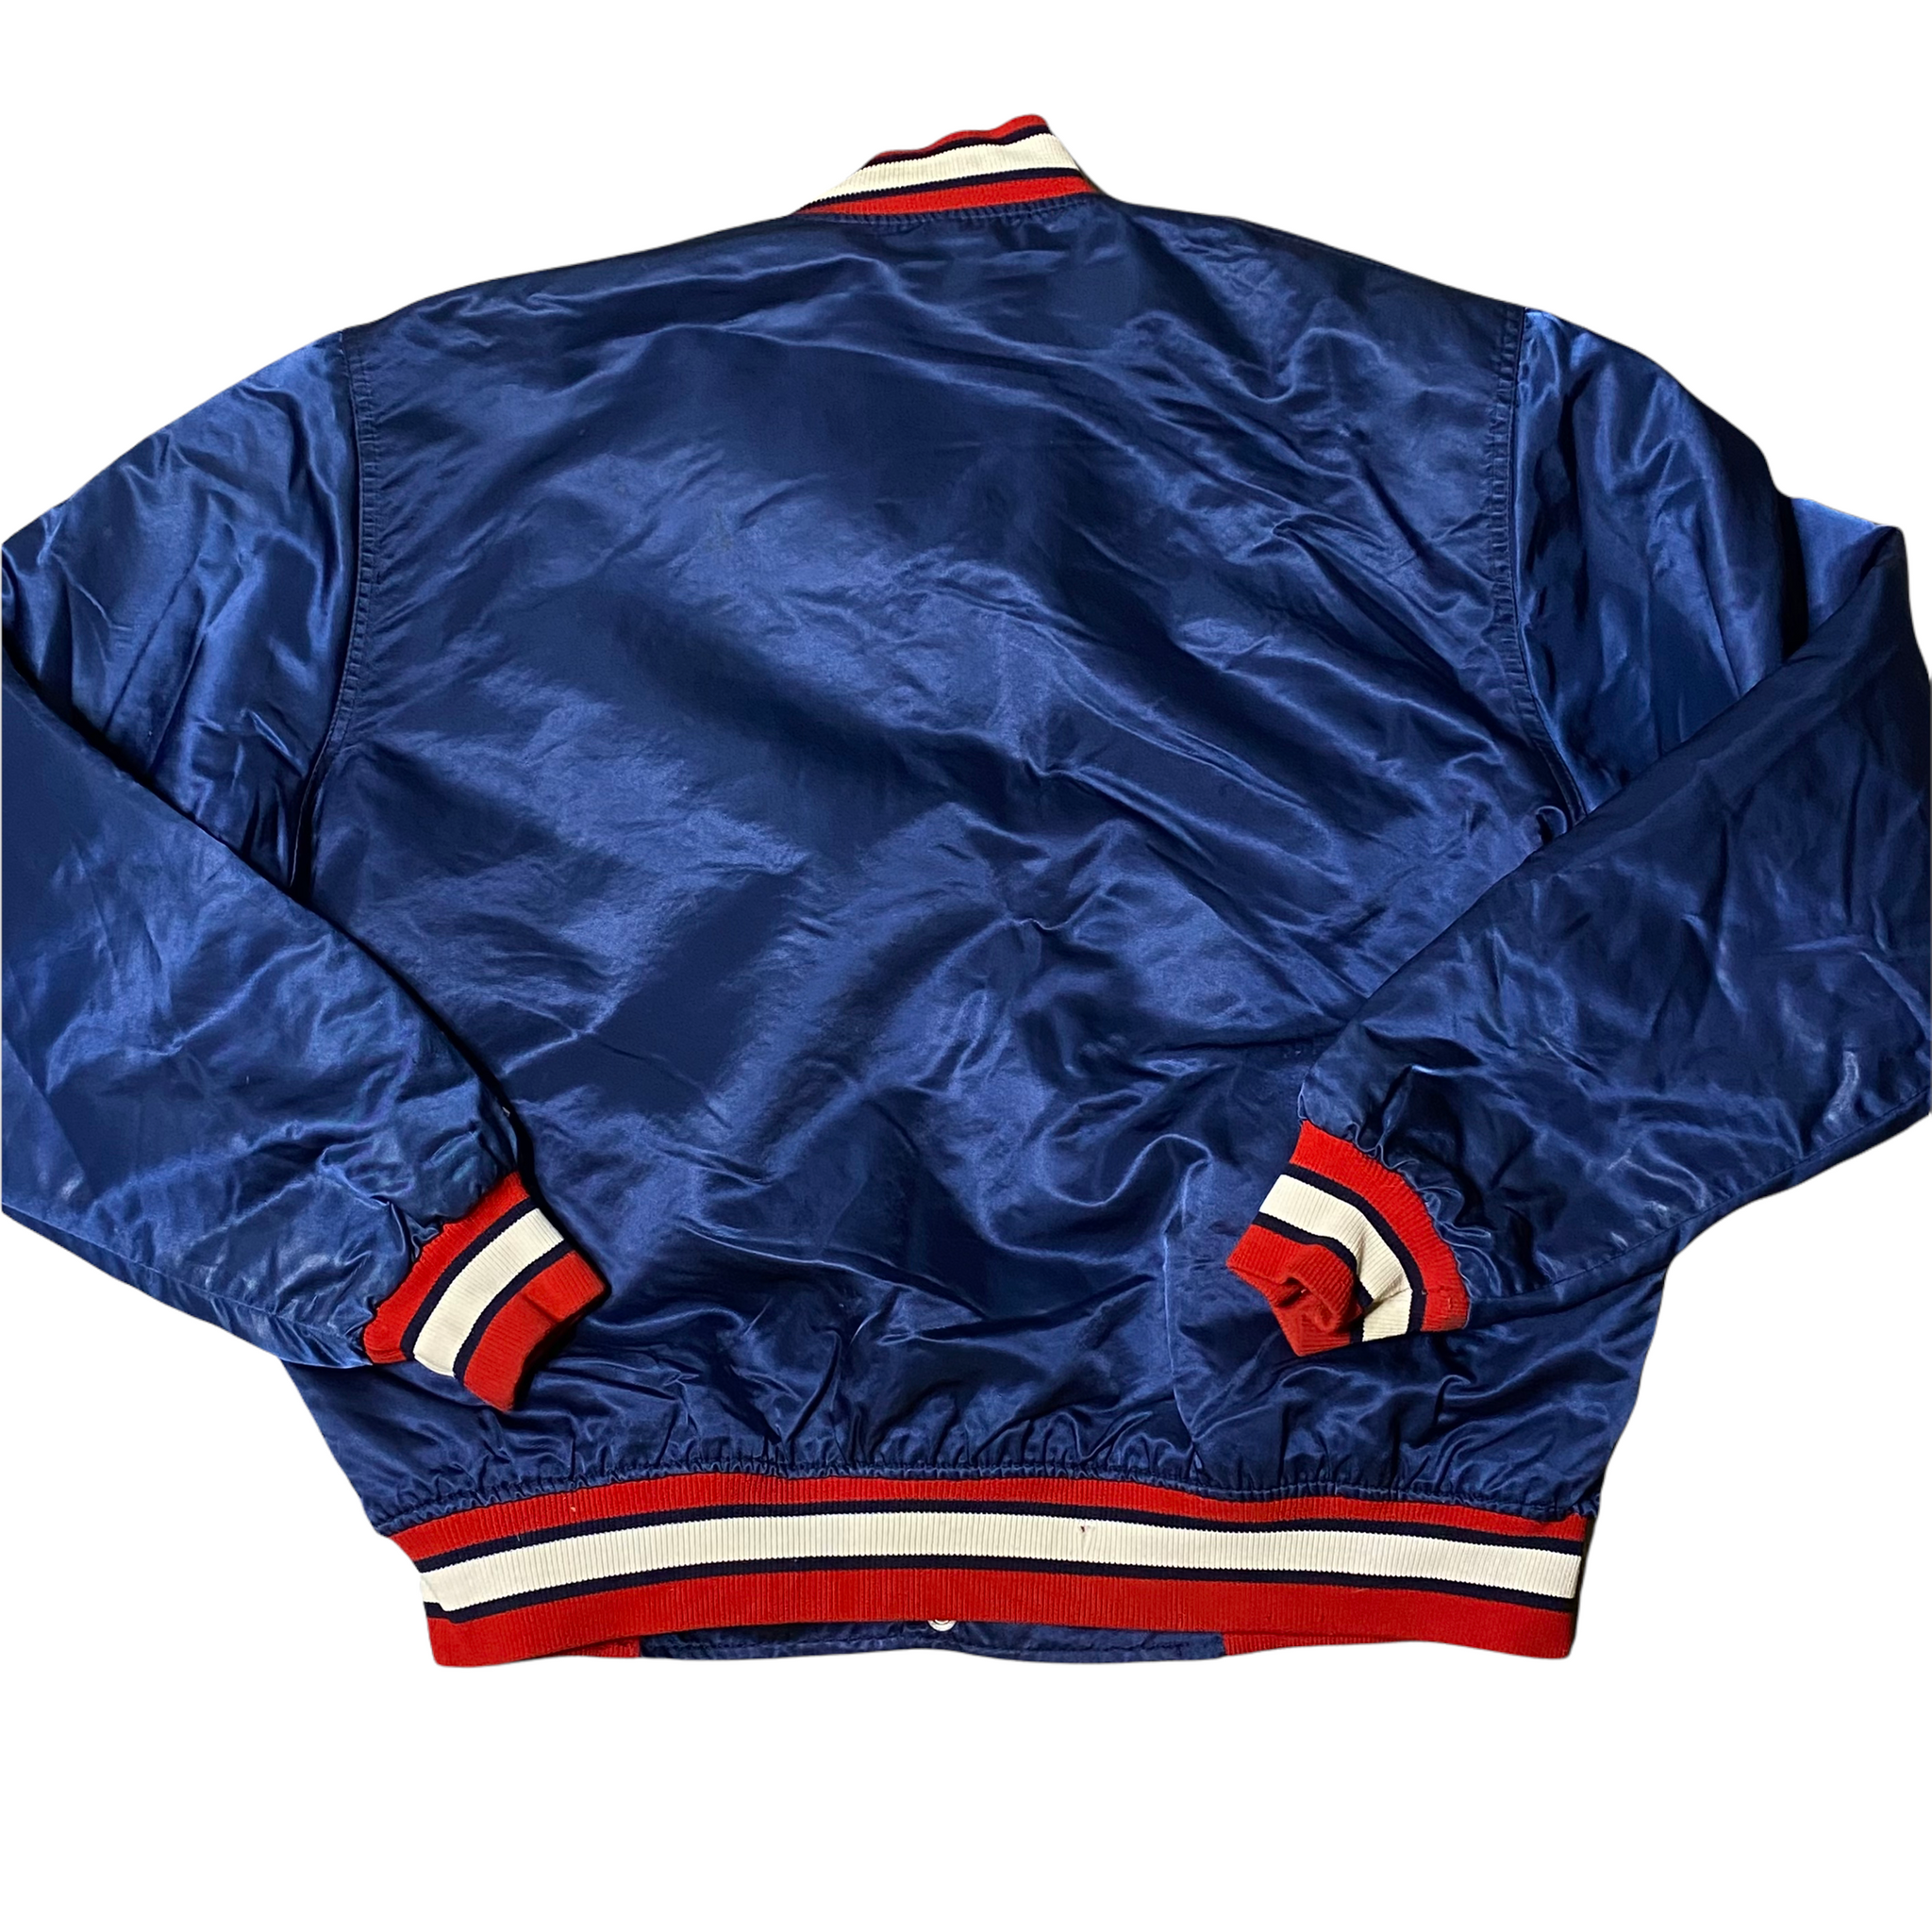 Vintage 1980s Atlanta Braves Satin Bomber Starter Jacket SPELL OUT